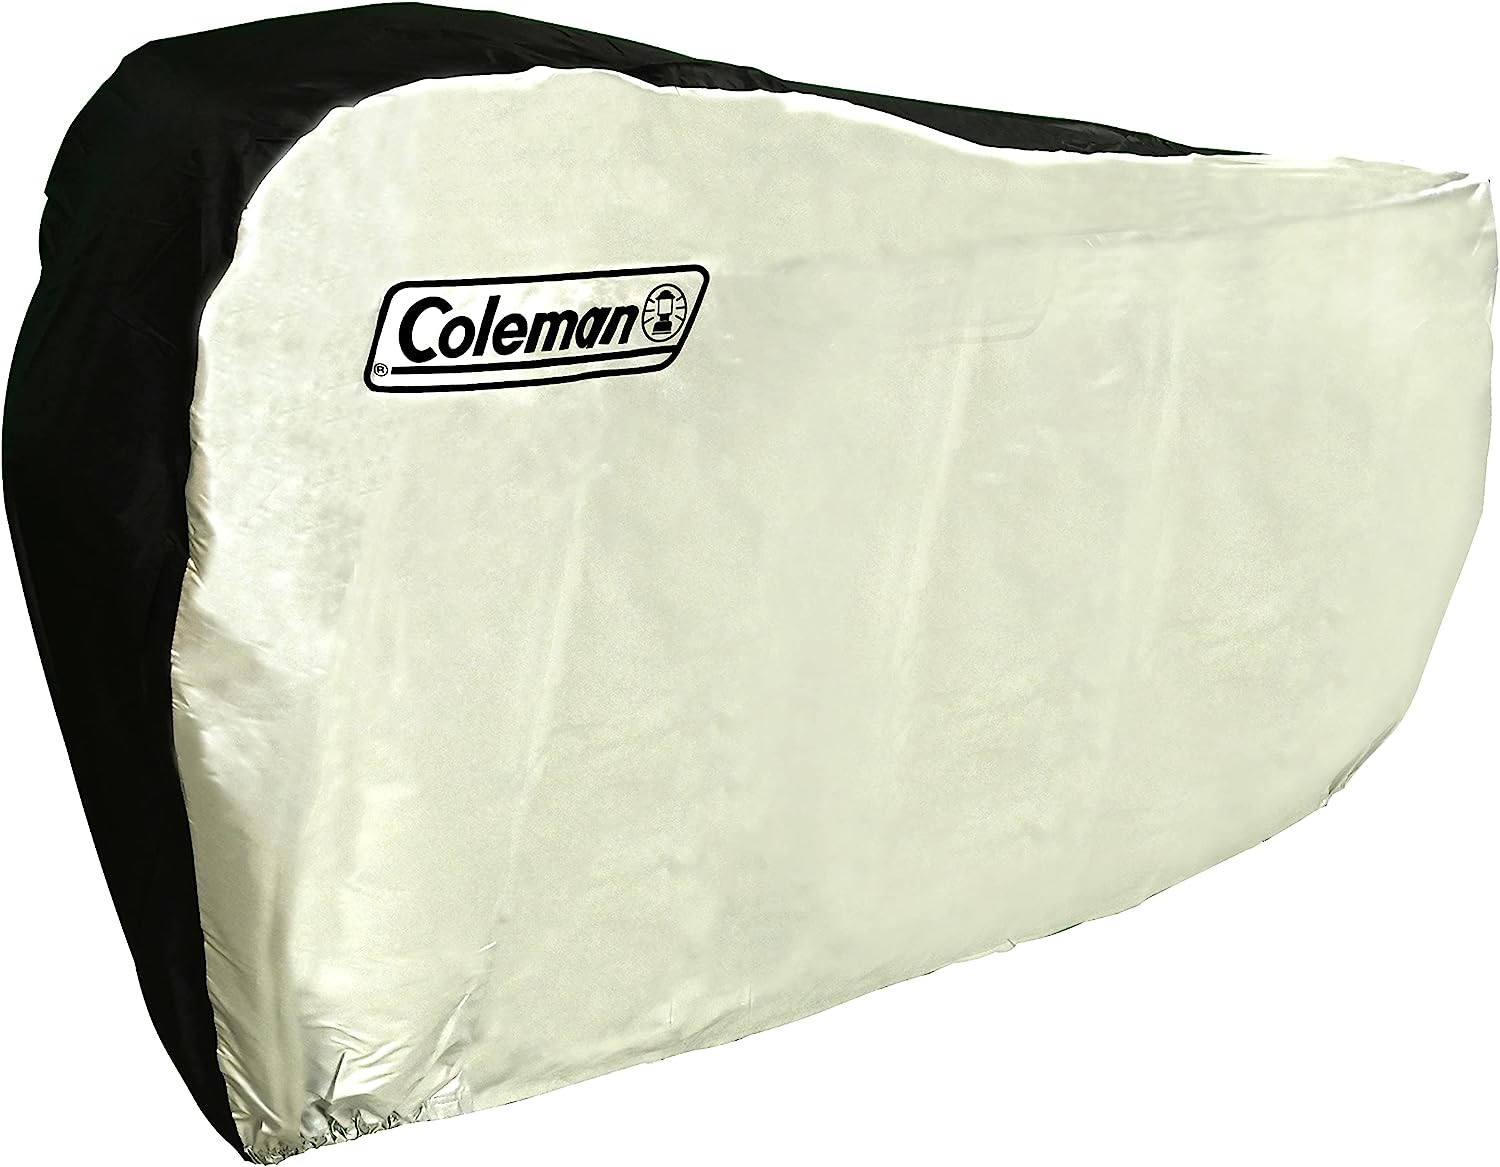 Coleman Coleman(コールマン)/自転車カバー/サイクルカバー/厚手/丈夫/フリーサイズ/防水/防風/防犯/防塵/収納袋付/破れにくい/紫外線/UV